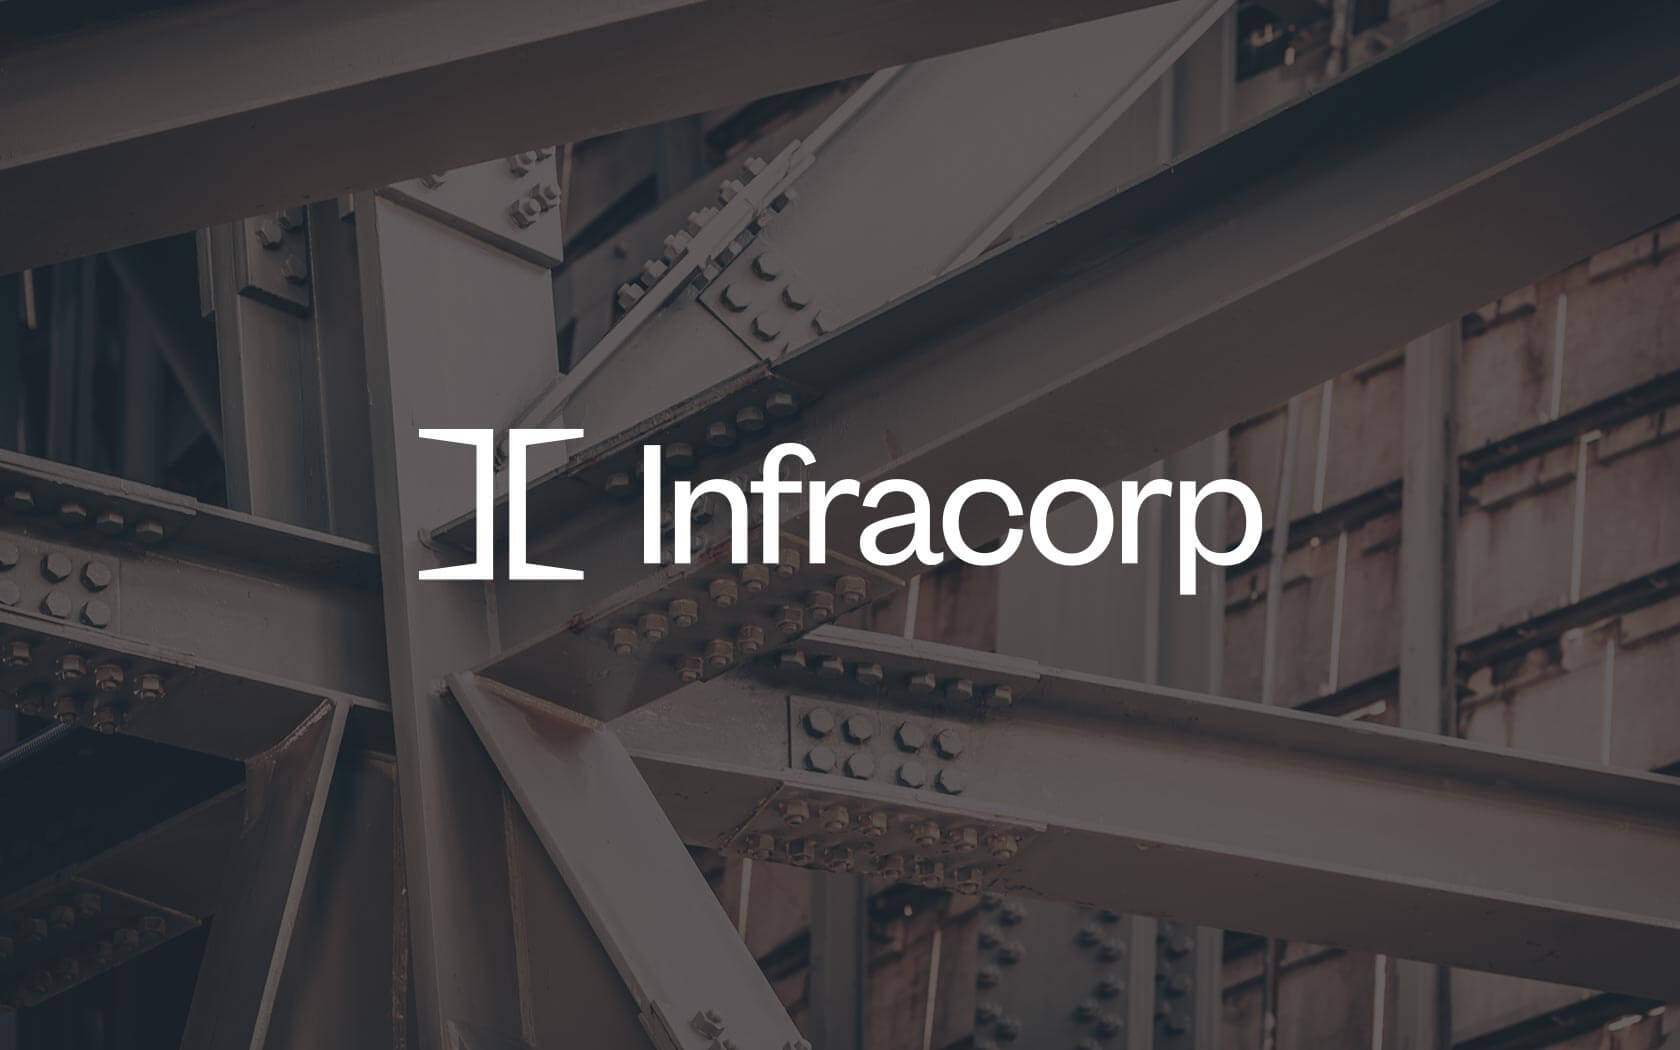 Infracorp brand logo in white